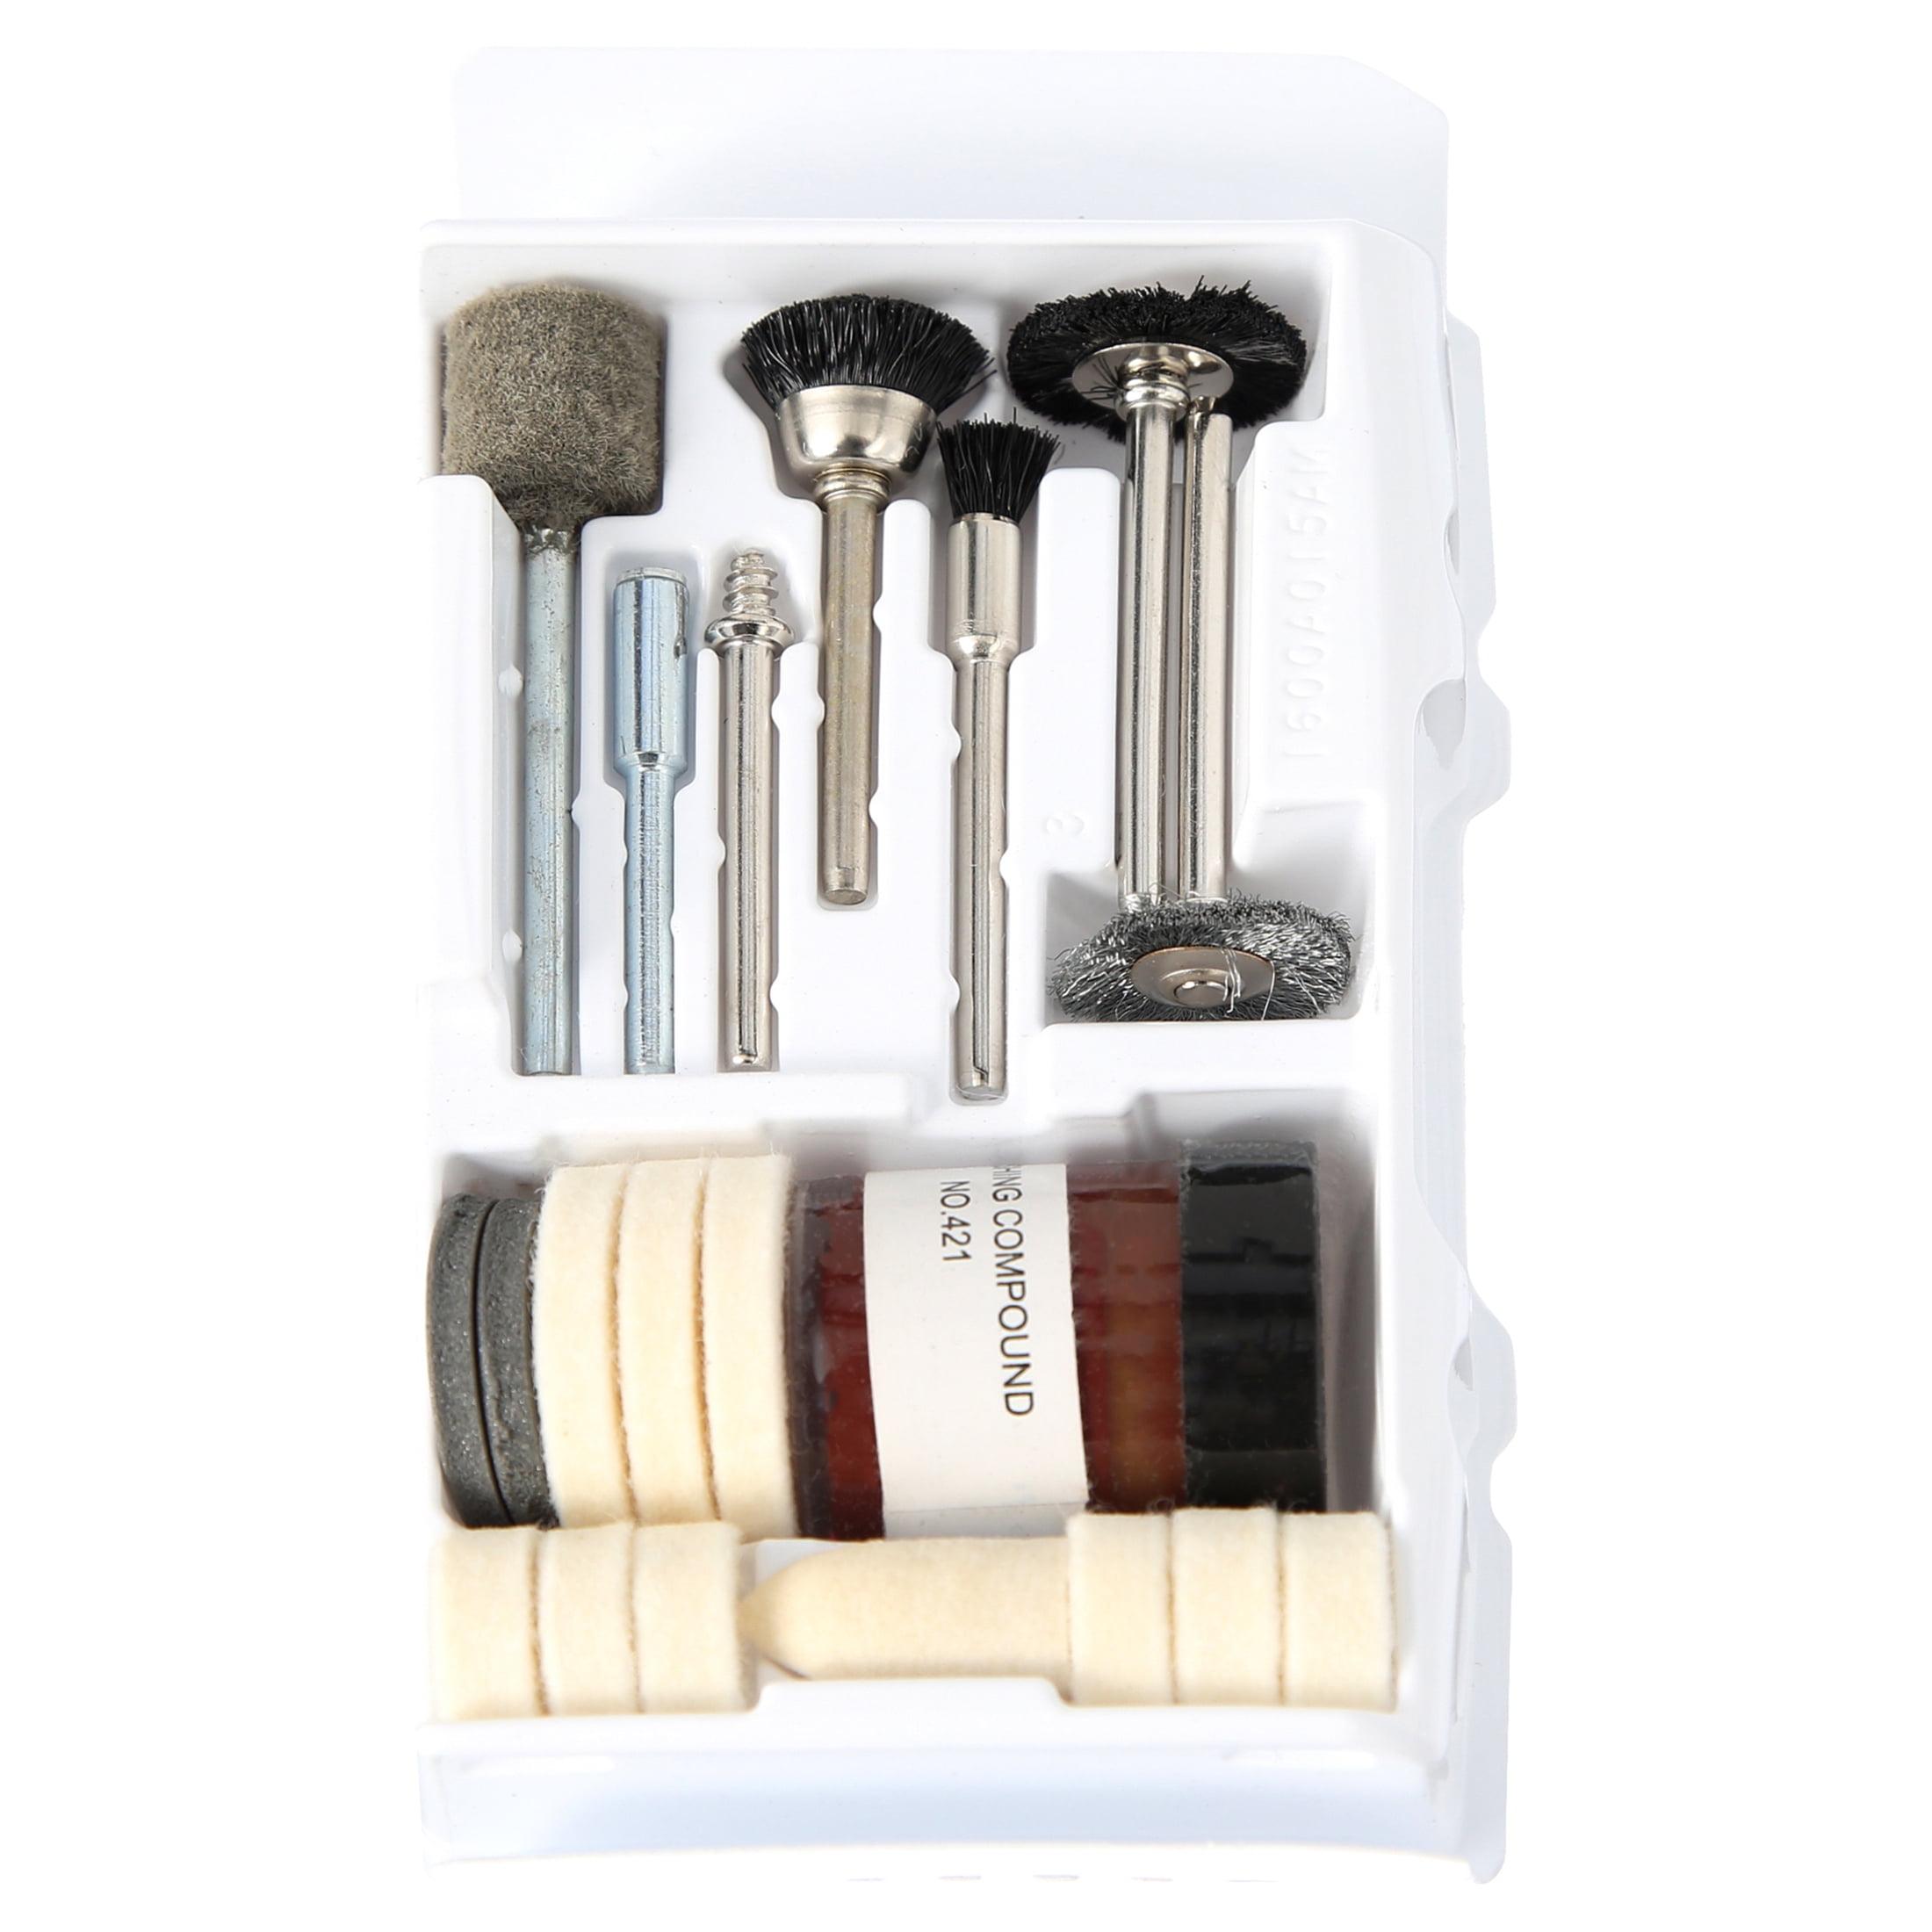 WORKPRO 476PCS Dremel Rotary Tool Accessories Kit Grinding Sanding  Polishing Set